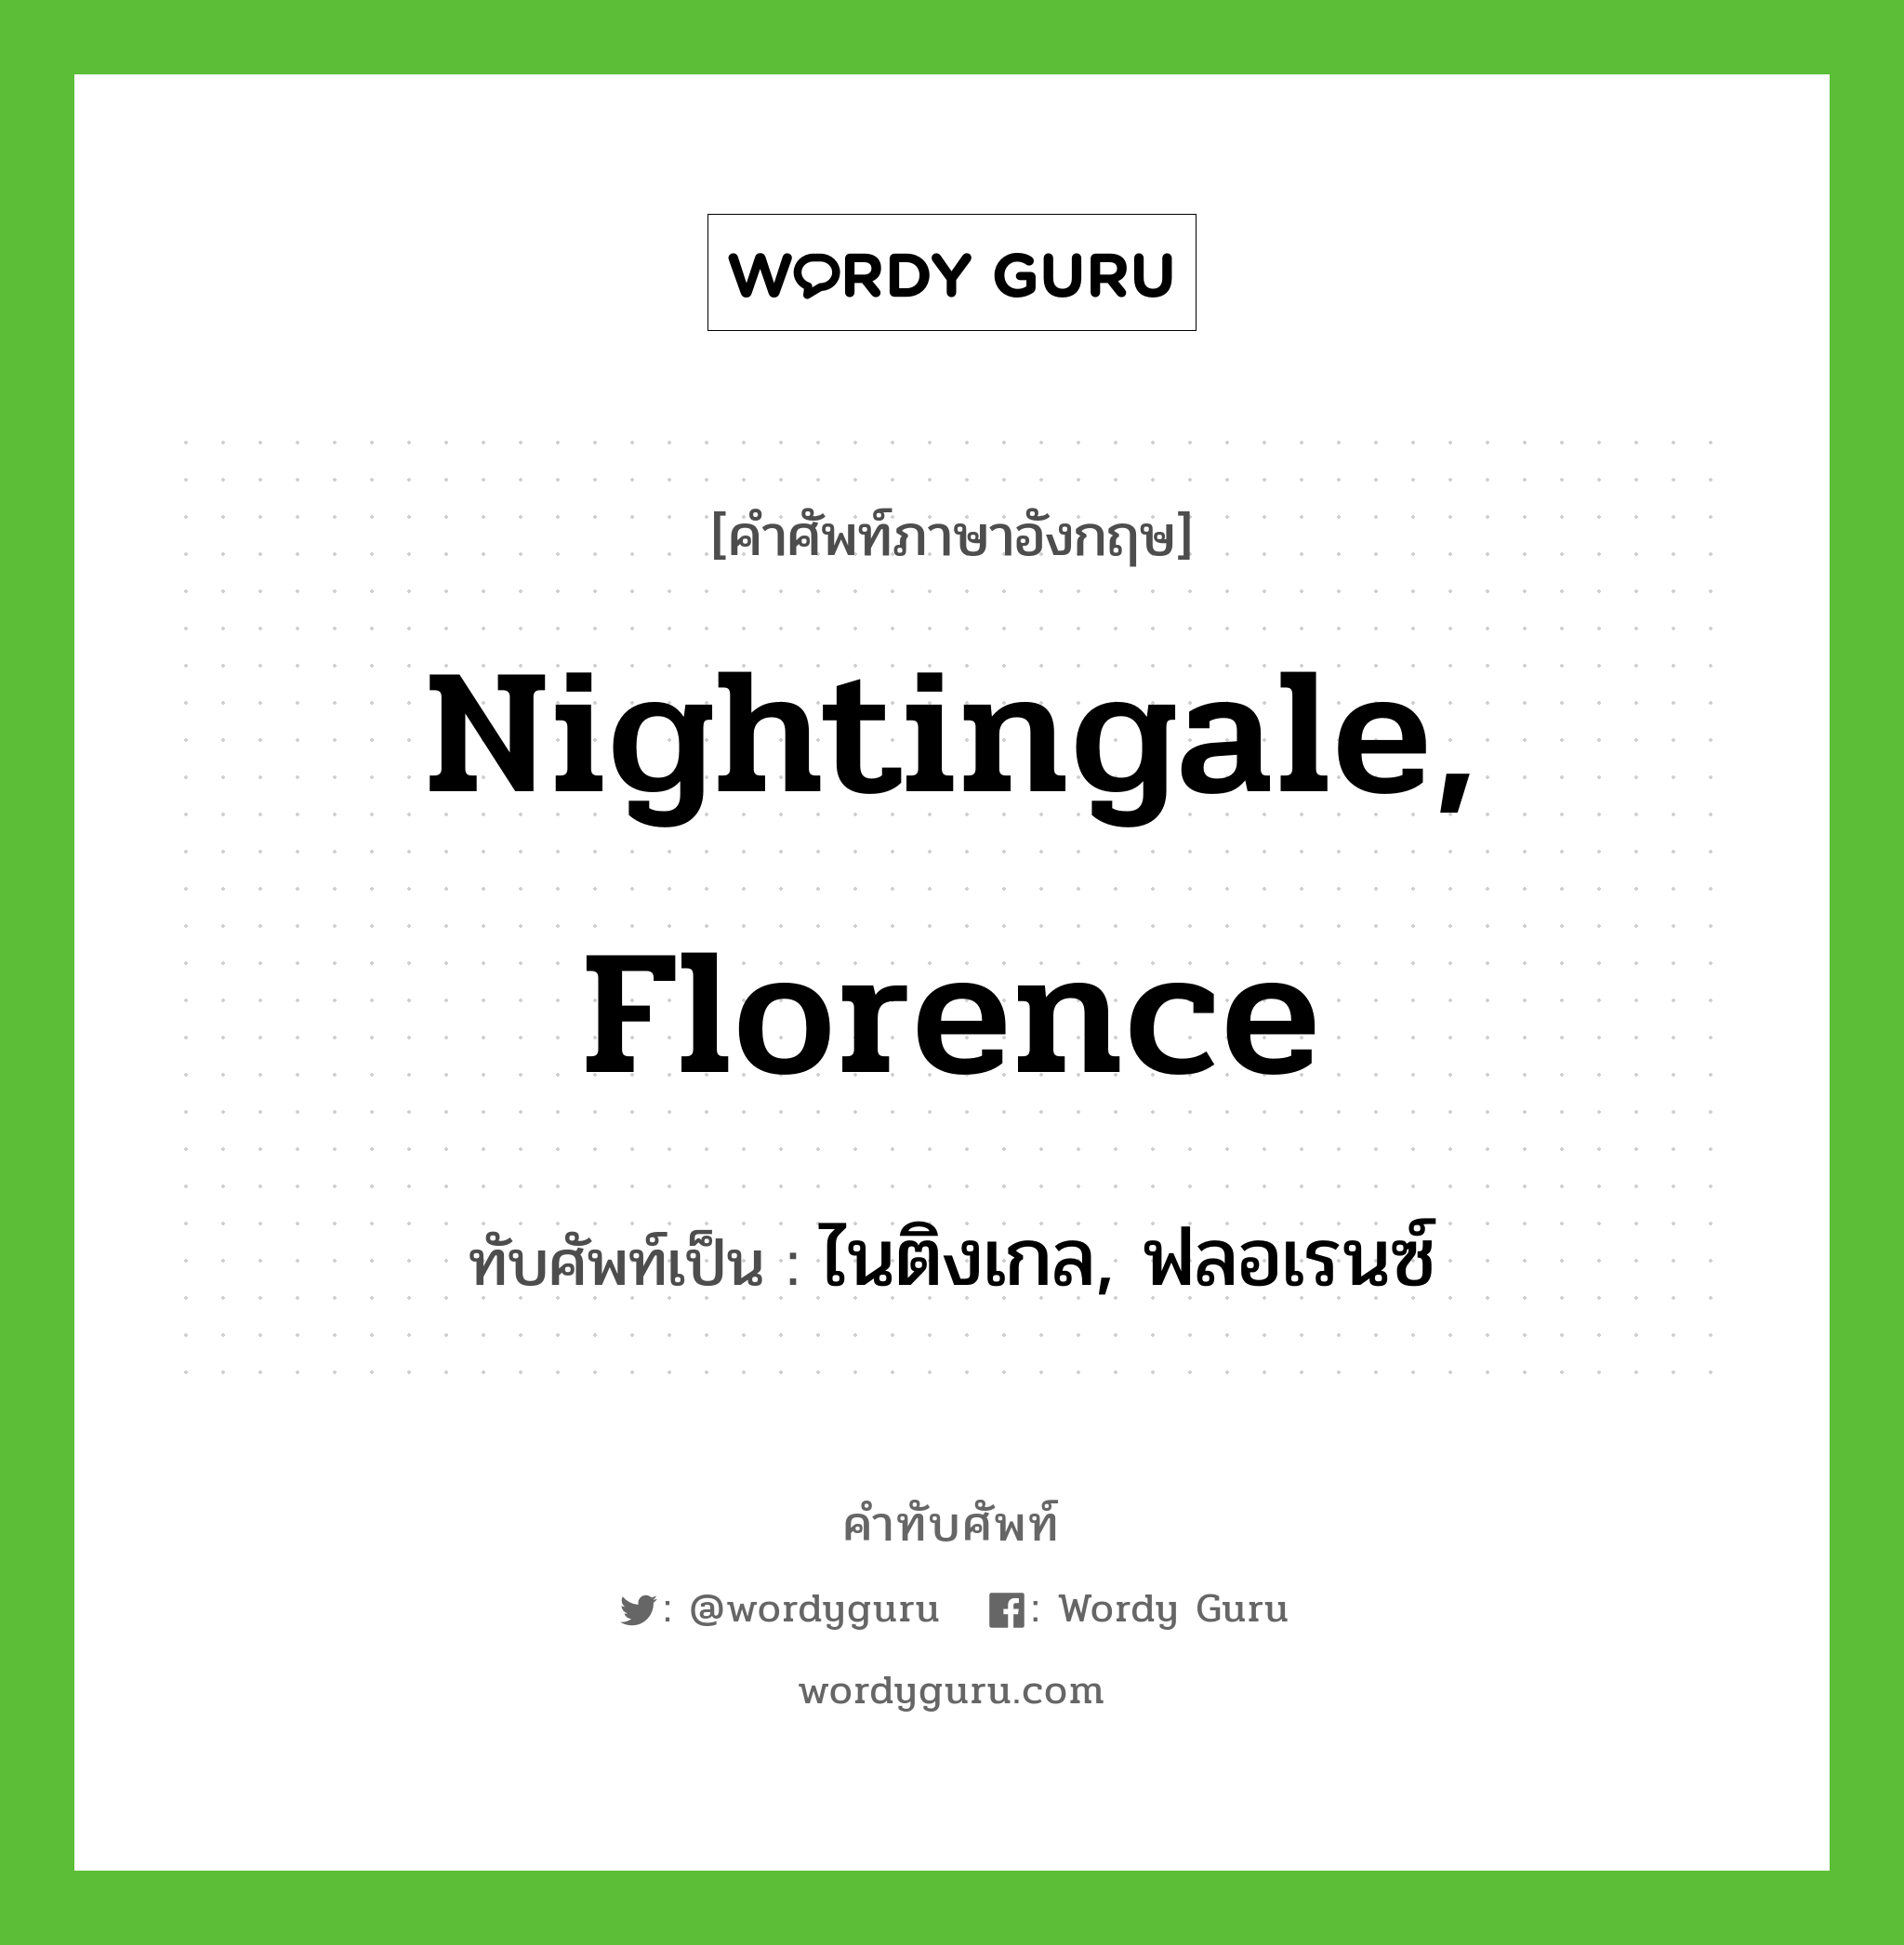 Nightingale, Florence เขียนเป็นคำไทยว่าอะไร?, คำศัพท์ภาษาอังกฤษ Nightingale, Florence ทับศัพท์เป็น ไนติงเกล, ฟลอเรนซ์